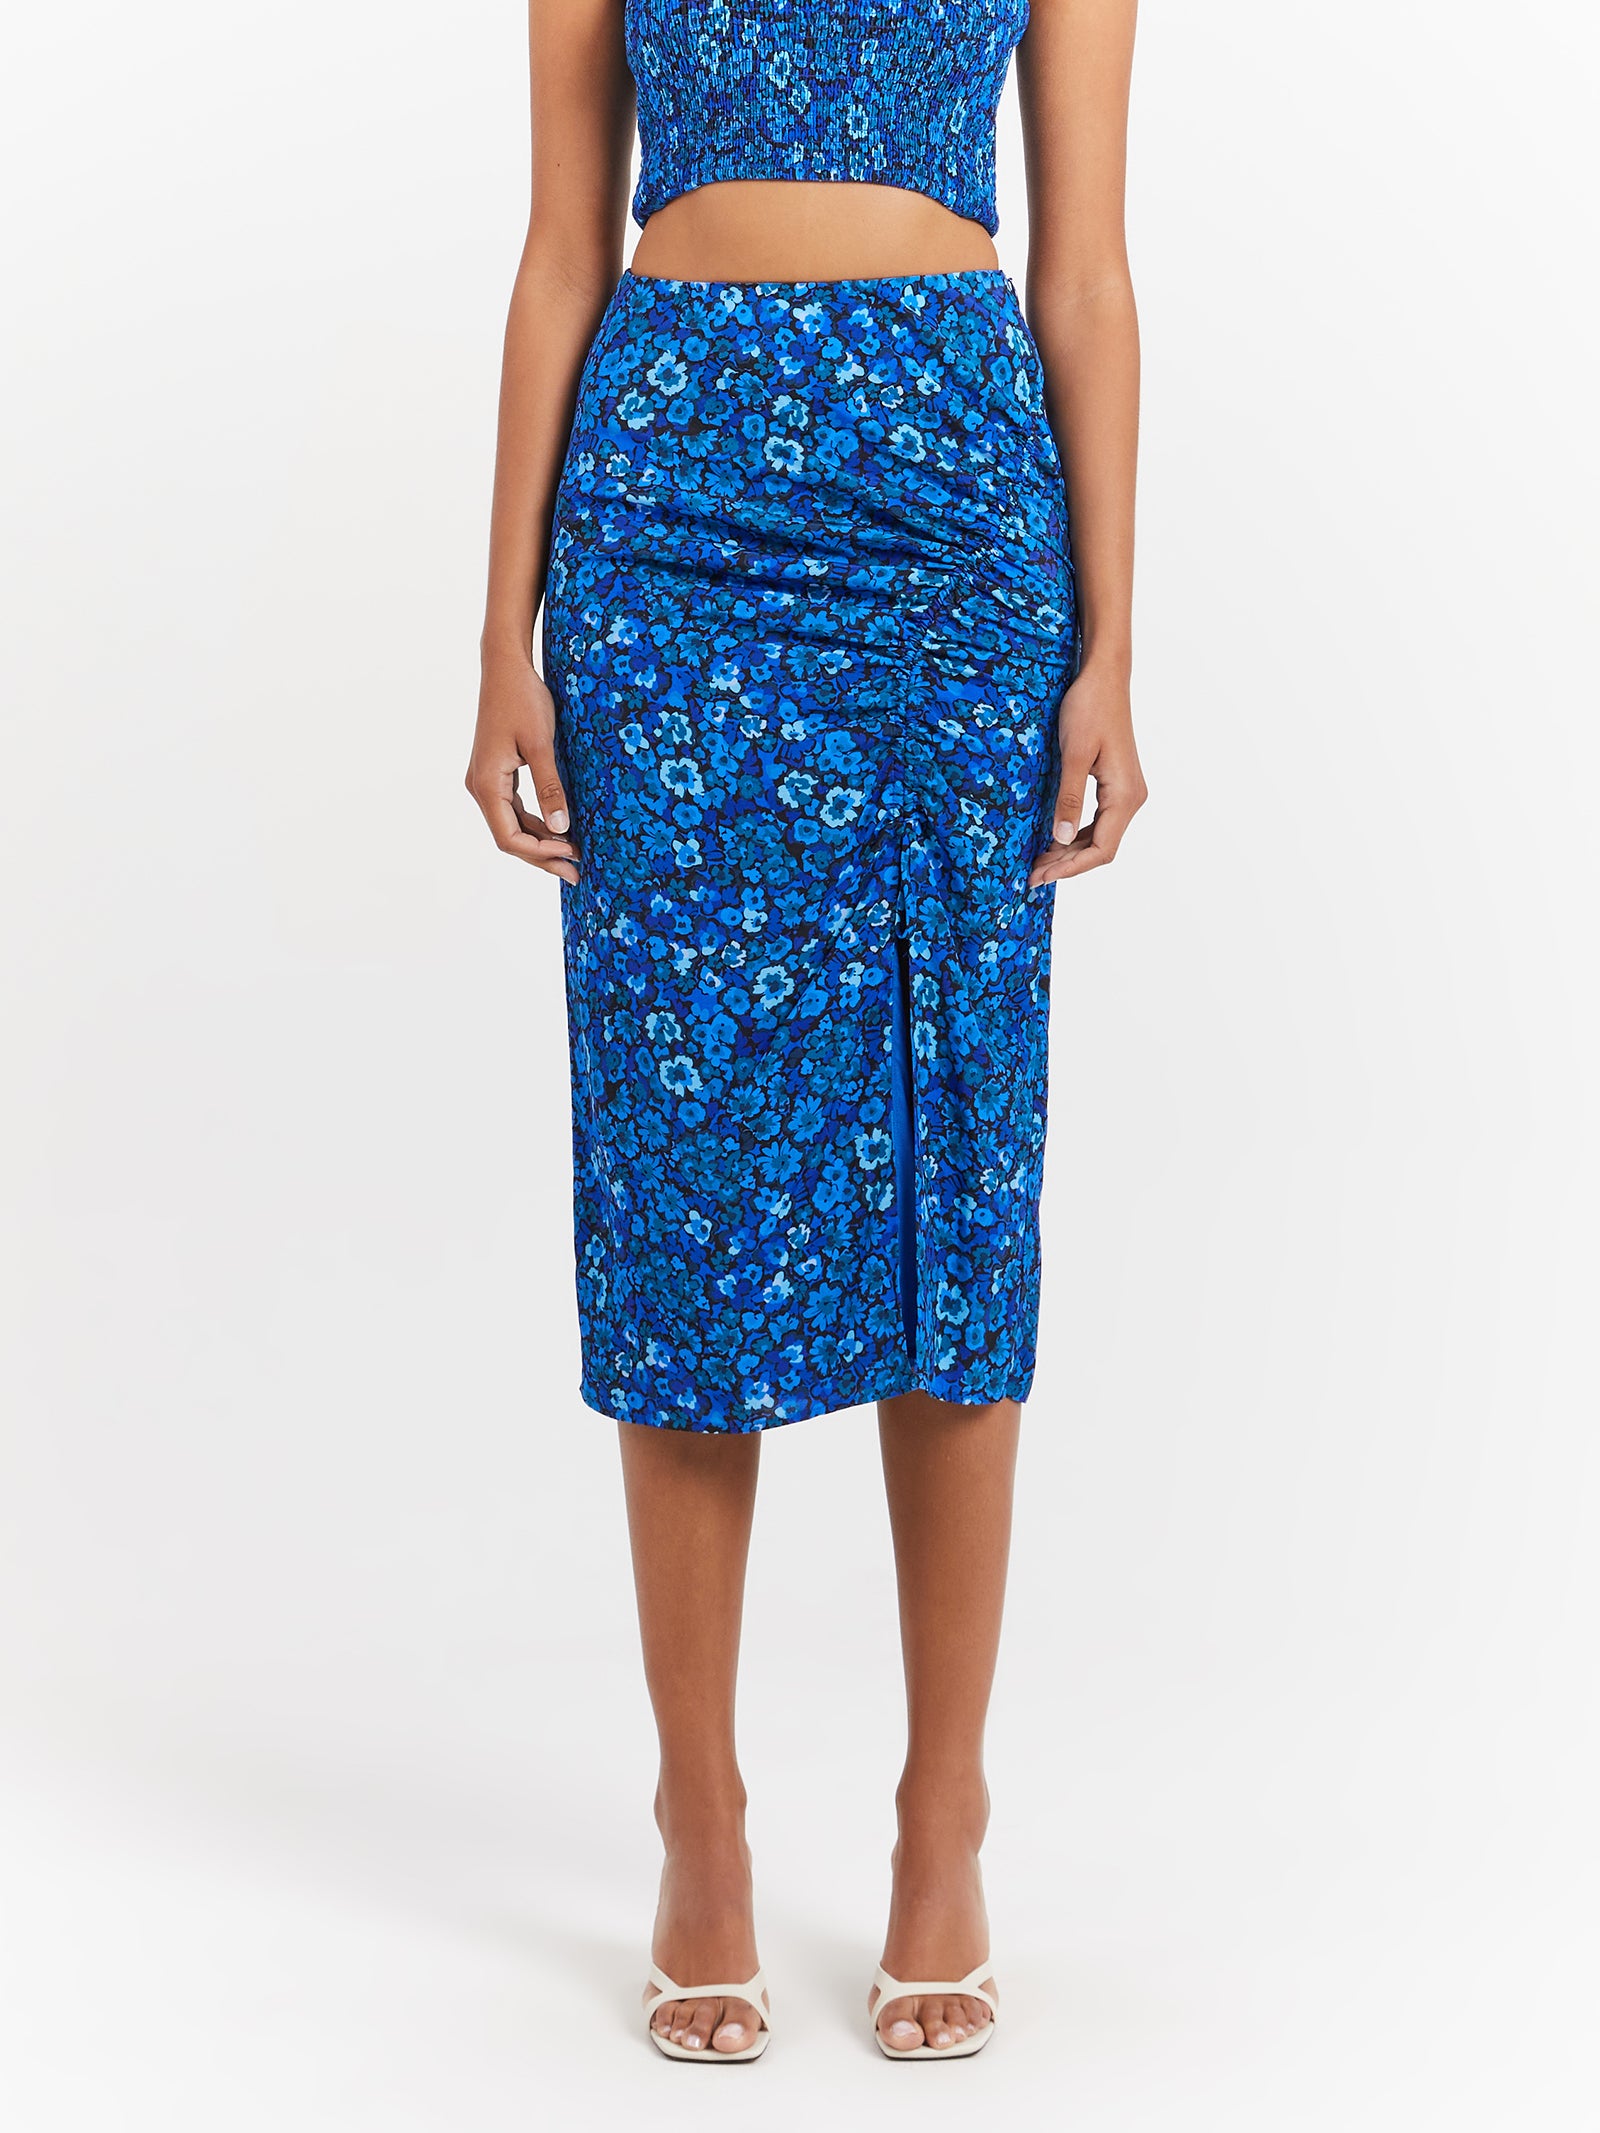 Elyna Ruched Midi Skirt in Azure Floral